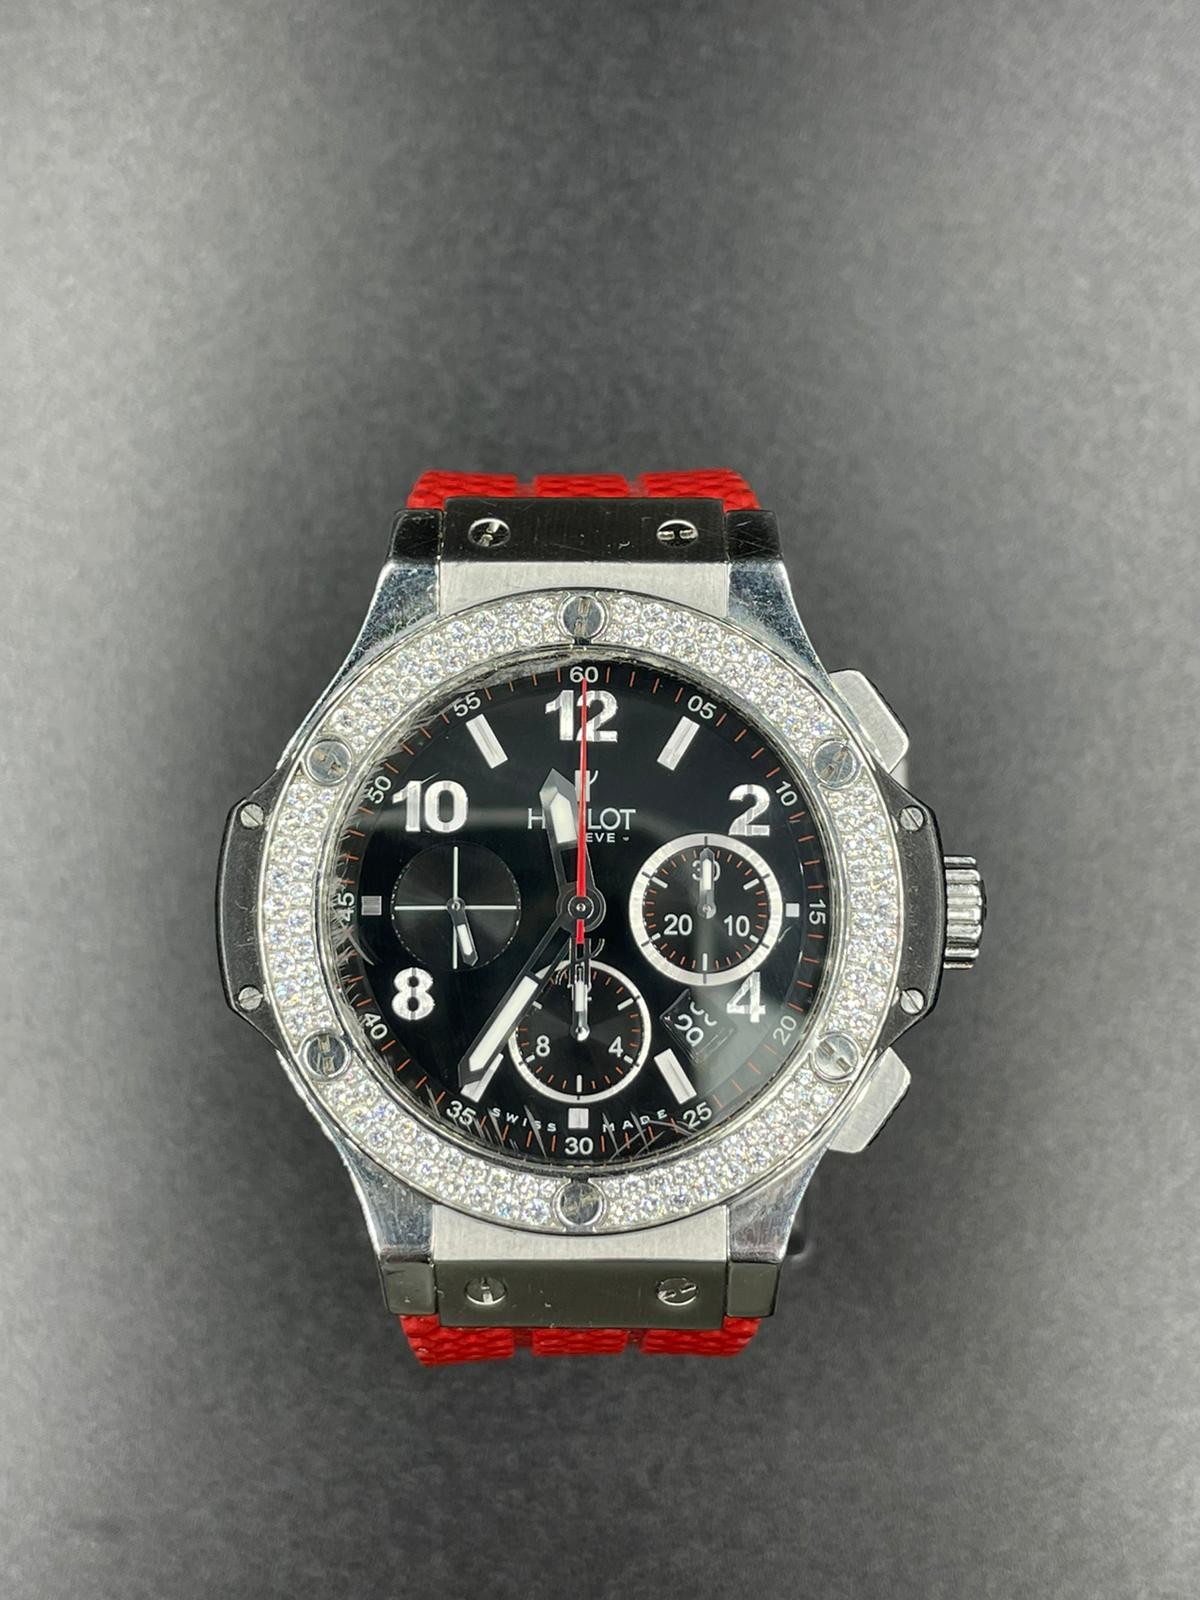 Hublot Big Bang chronometer watch with black face and original diamond dial - Image 2 of 5